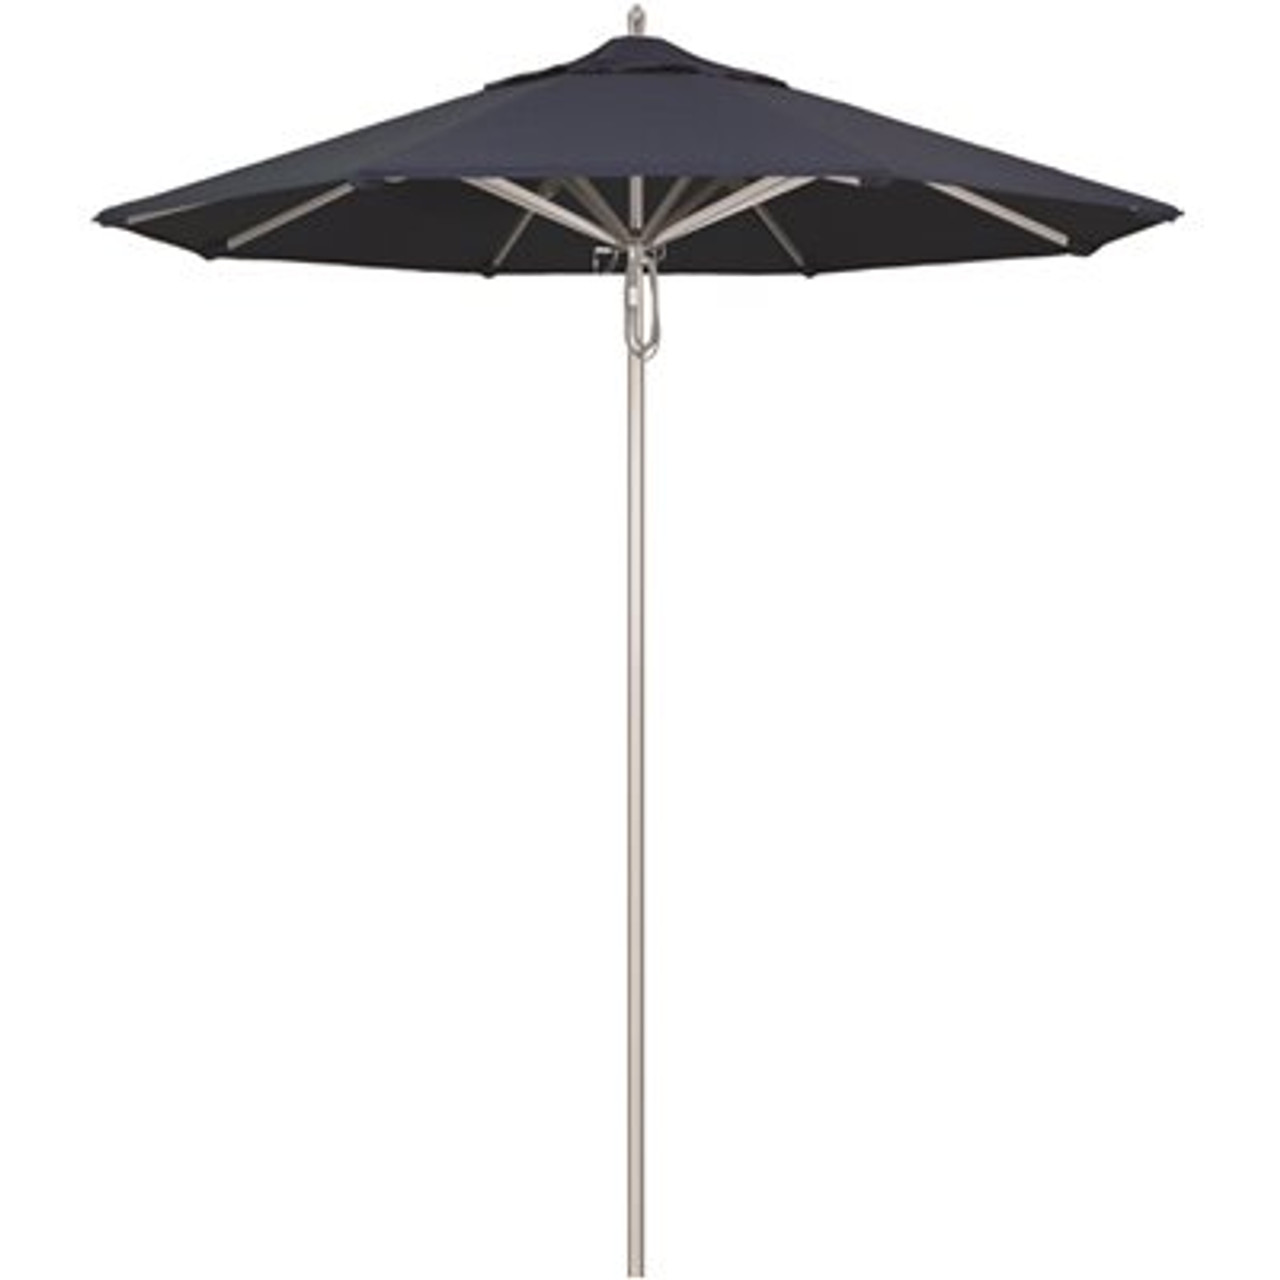 California Umbrella 7.5 ft. Silver Aluminum Commercial Market Patio Umbrella with Pulley Lift in Spectrum Indigo Sunbrella